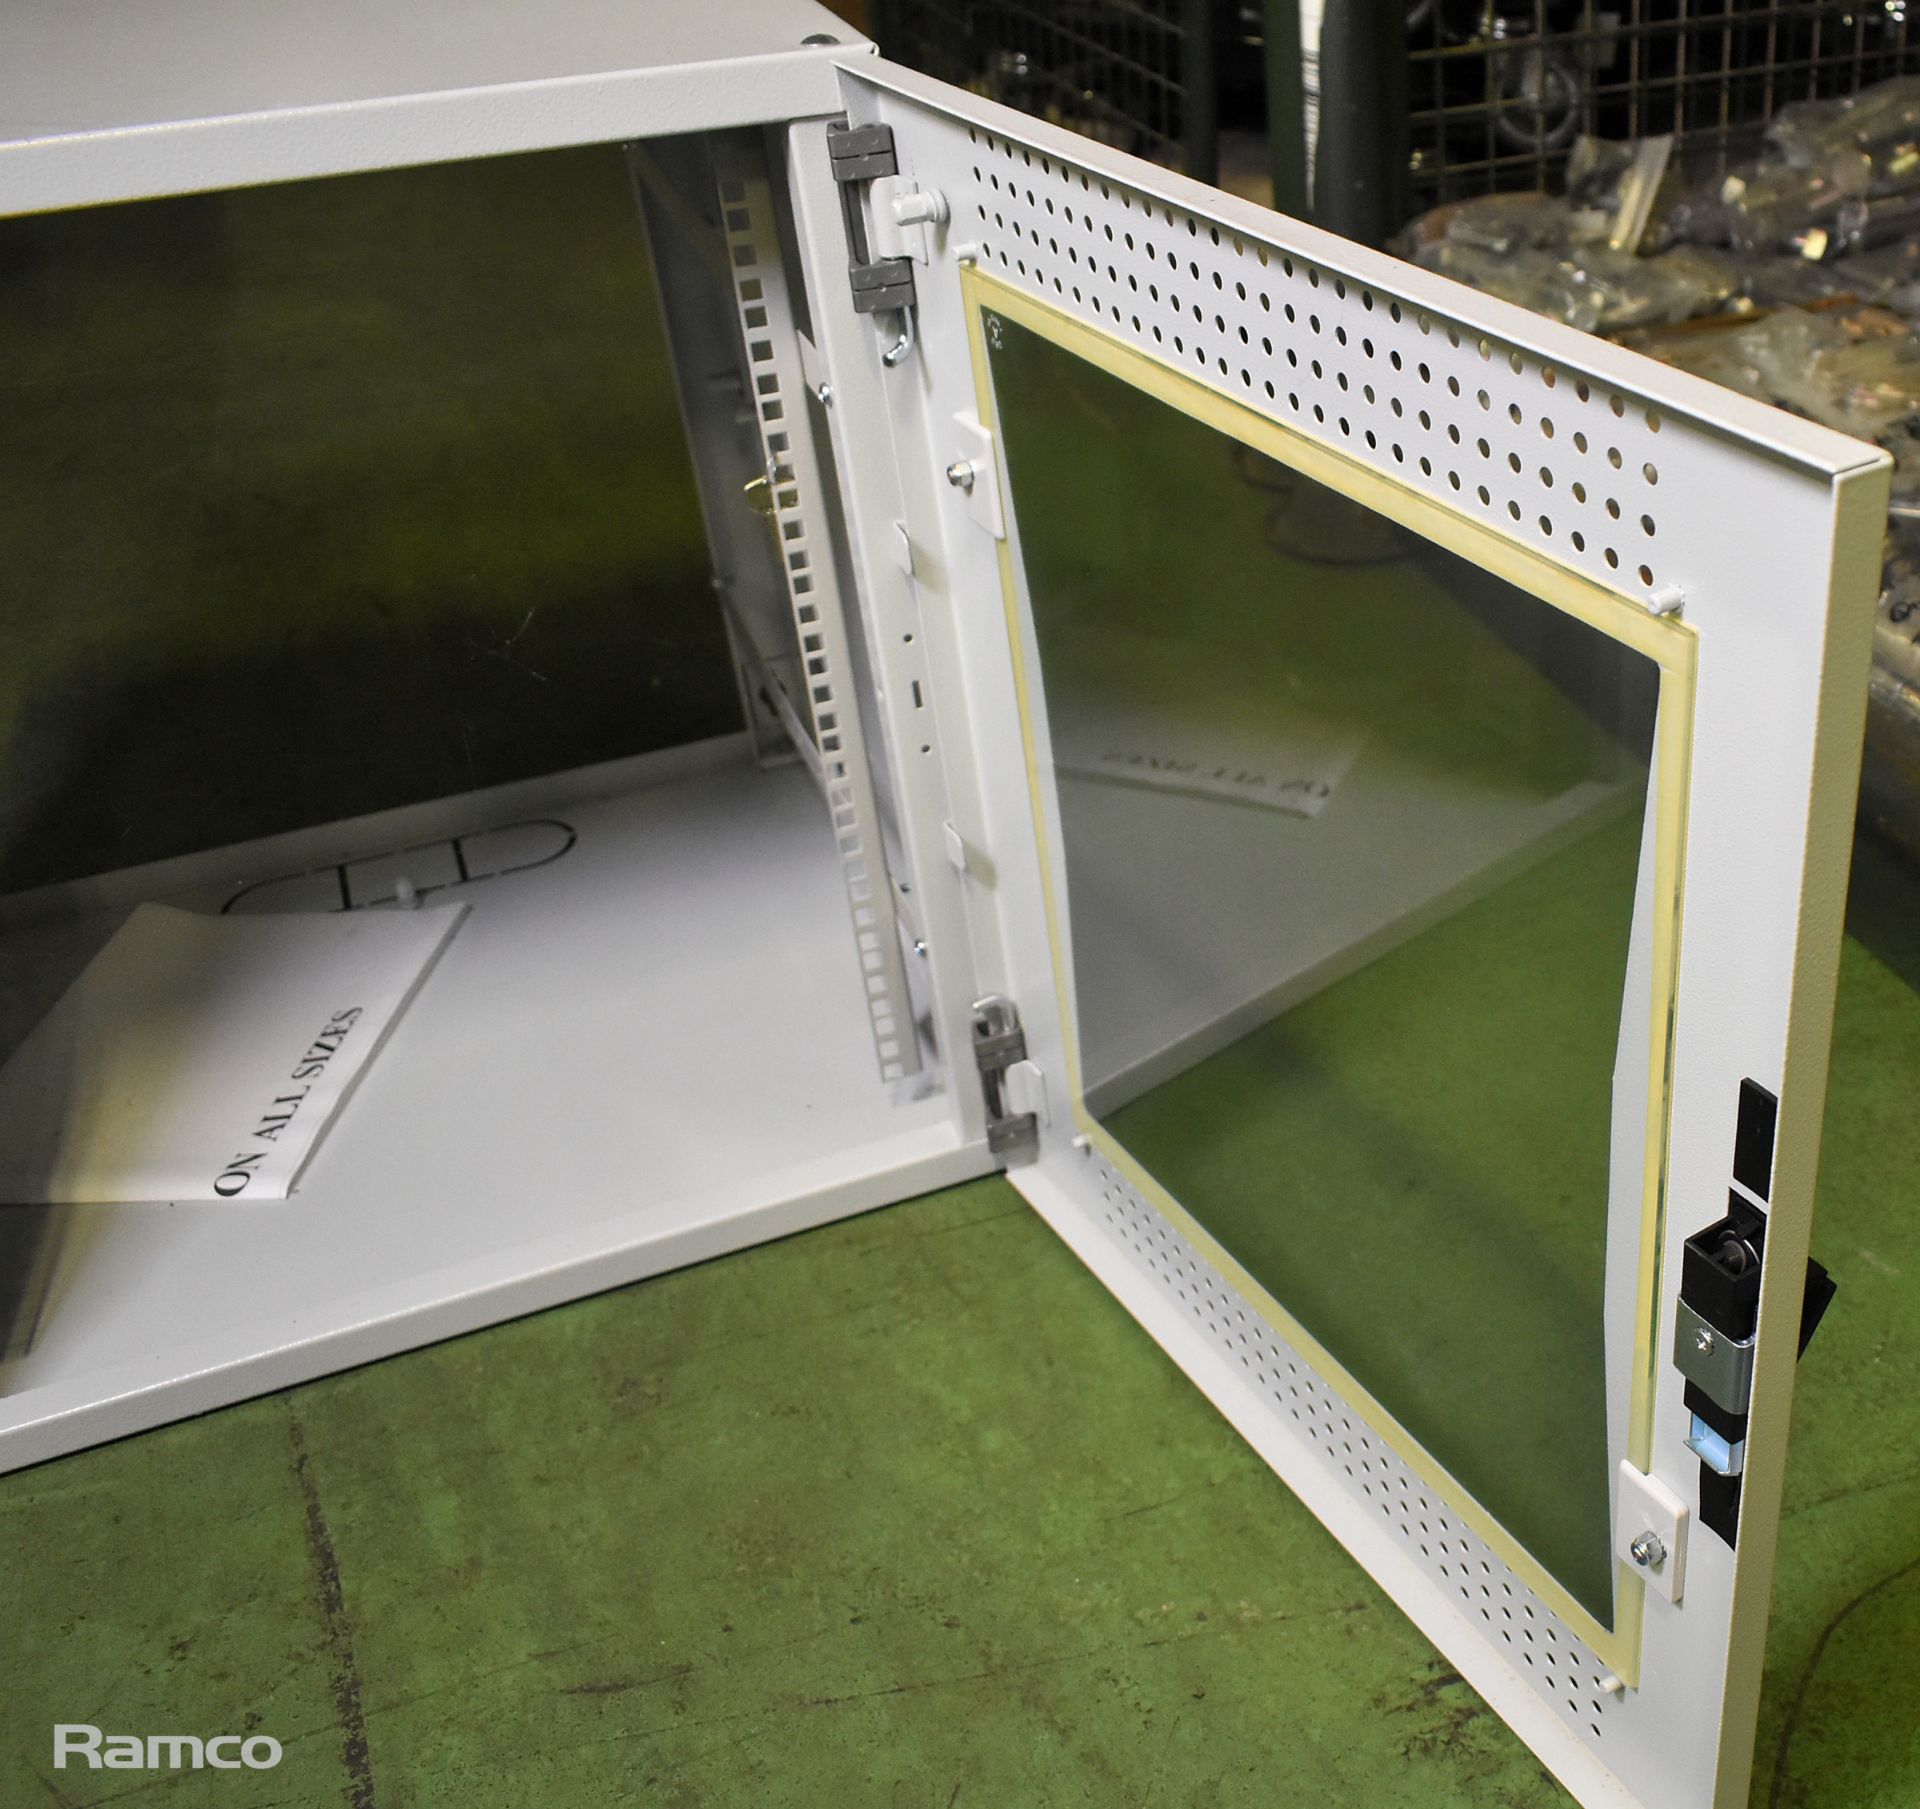 Rittal premium wallbox server cabinet - W 600 x D 600 x H 600mm - Image 3 of 5